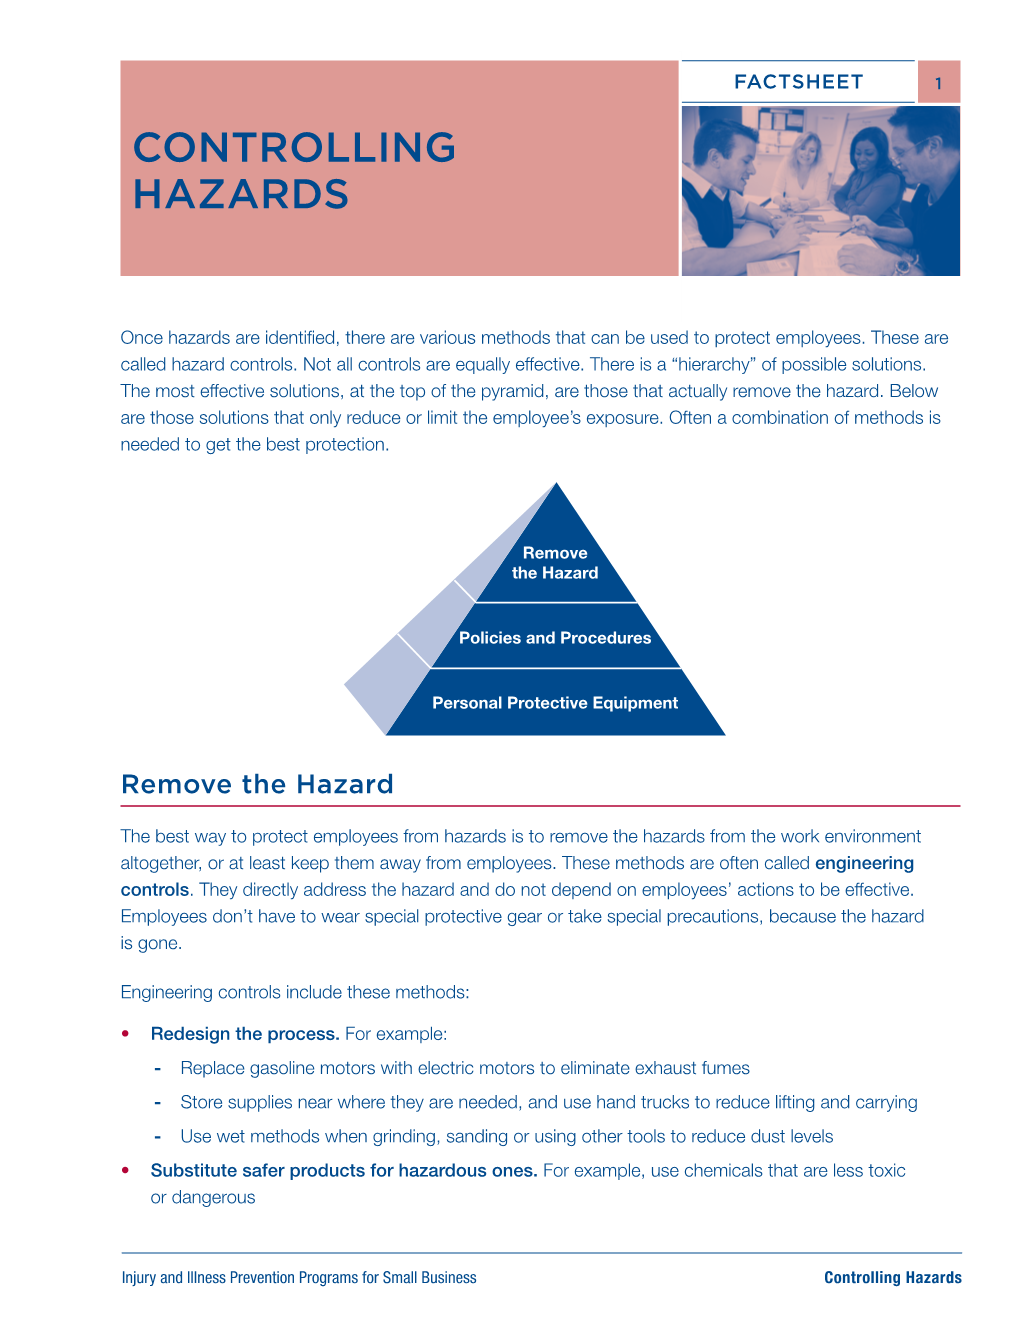 TASH Controlling Hazards Factsheet